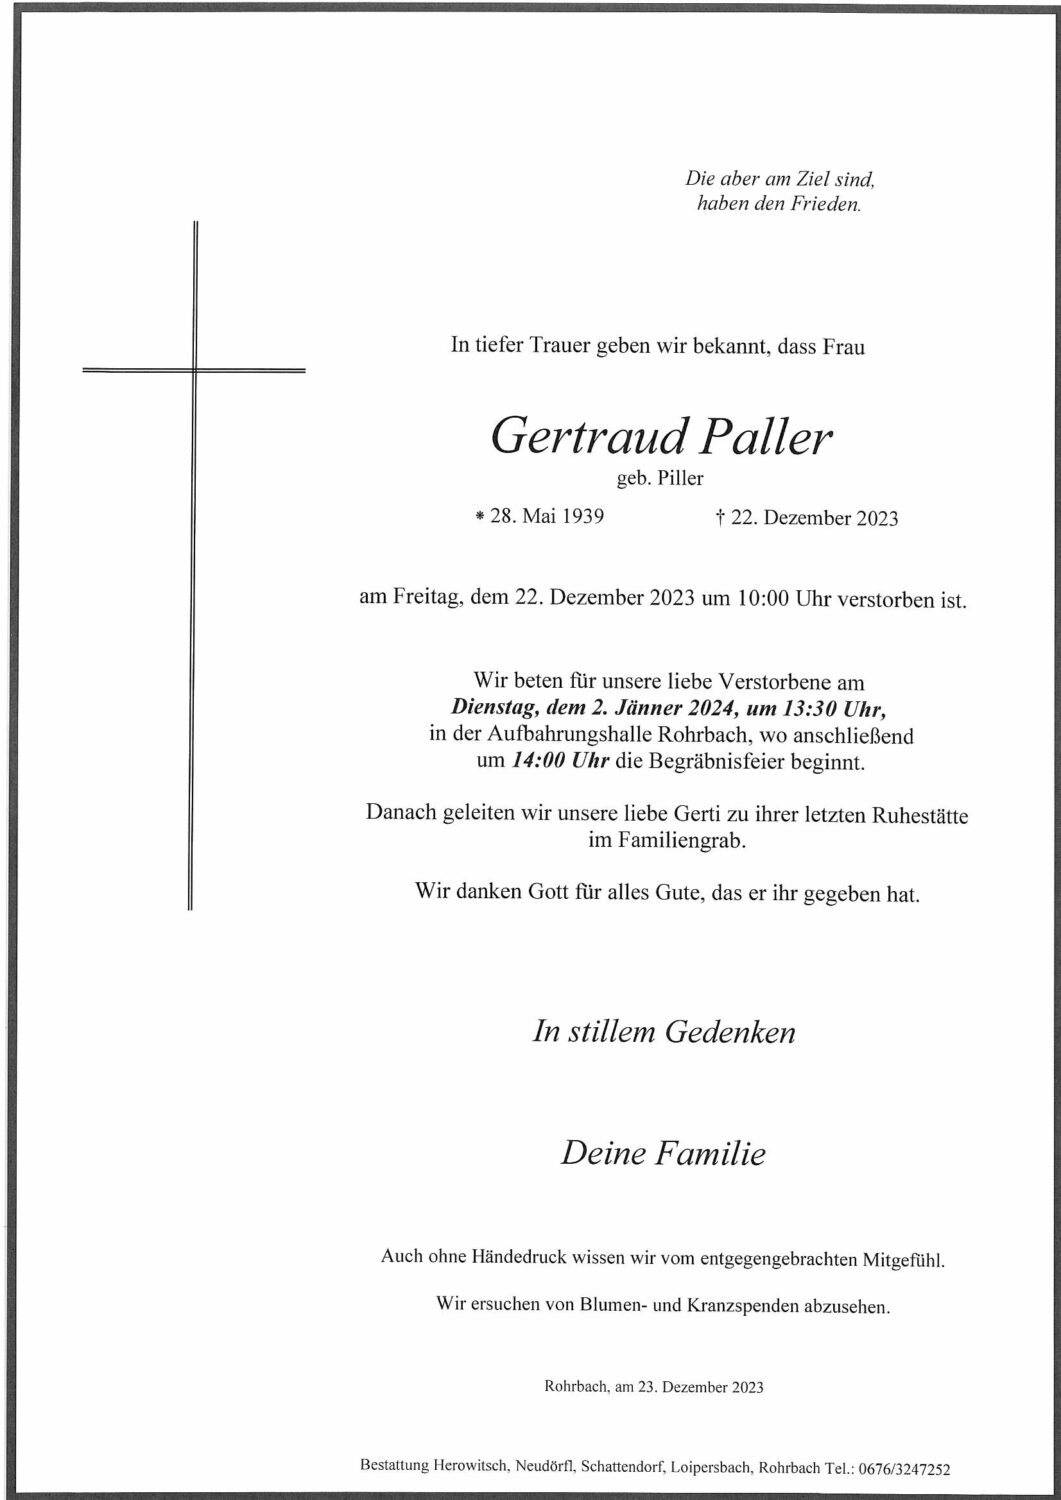 Gertraud Paller